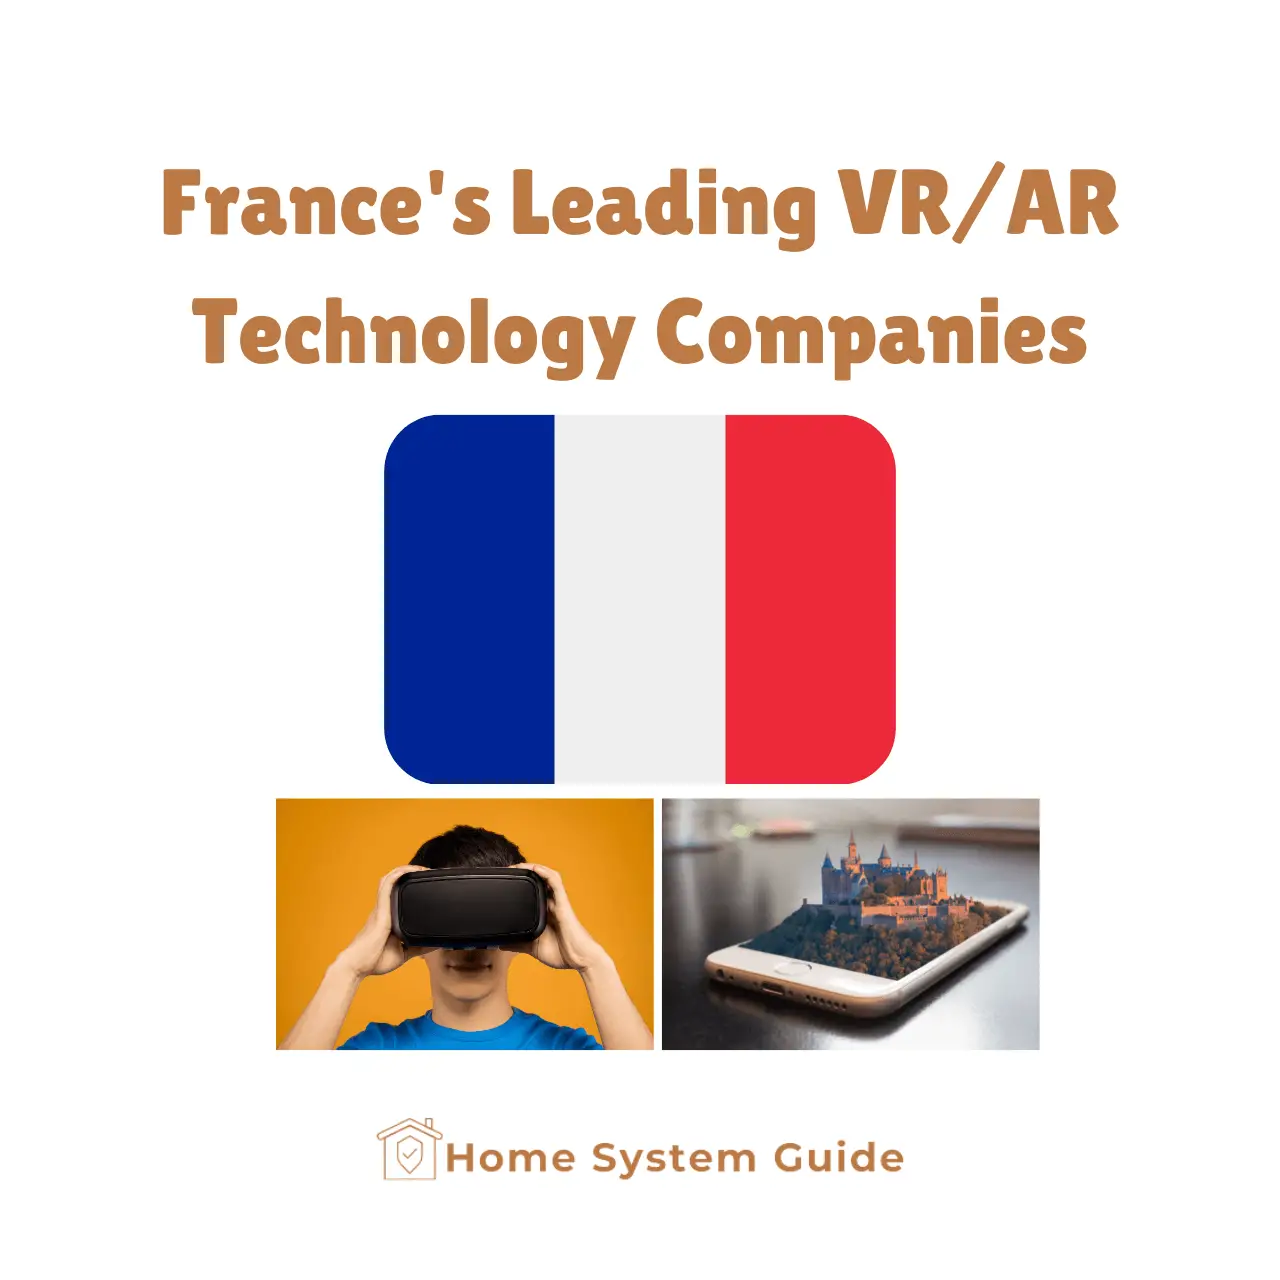 France's Leading VRAR Technology Companies